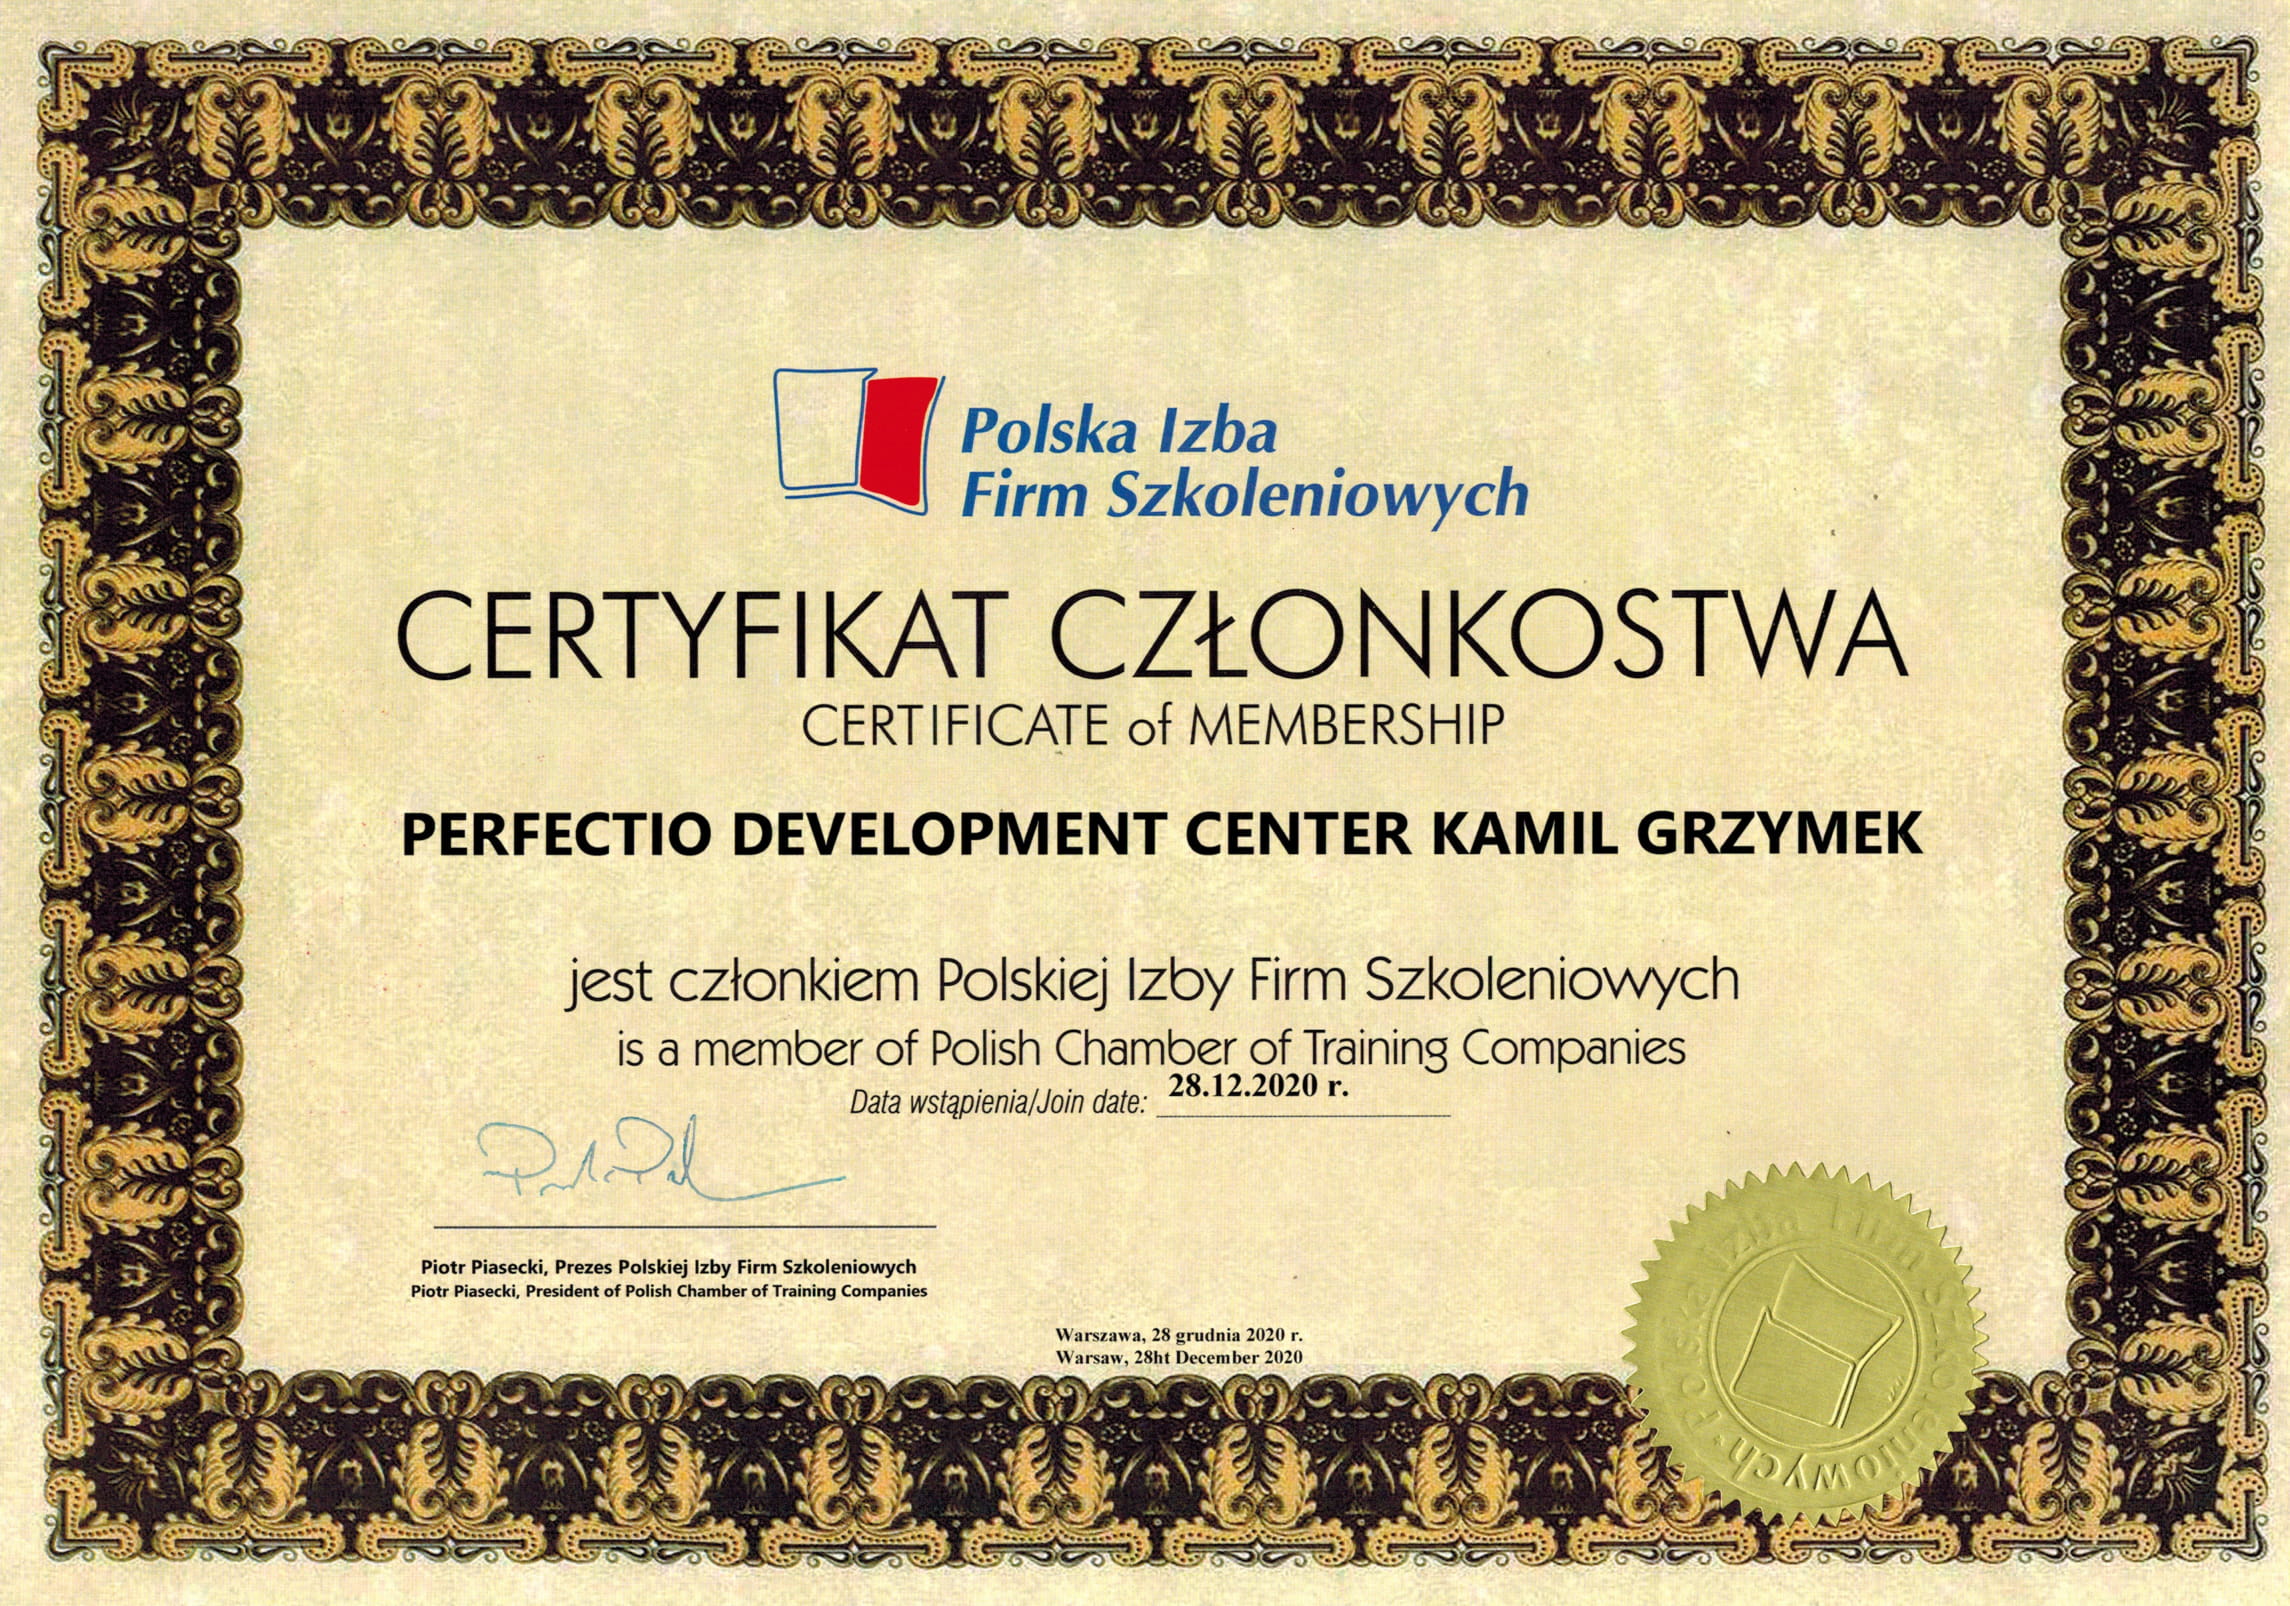 Perfectio Development Center PIFS